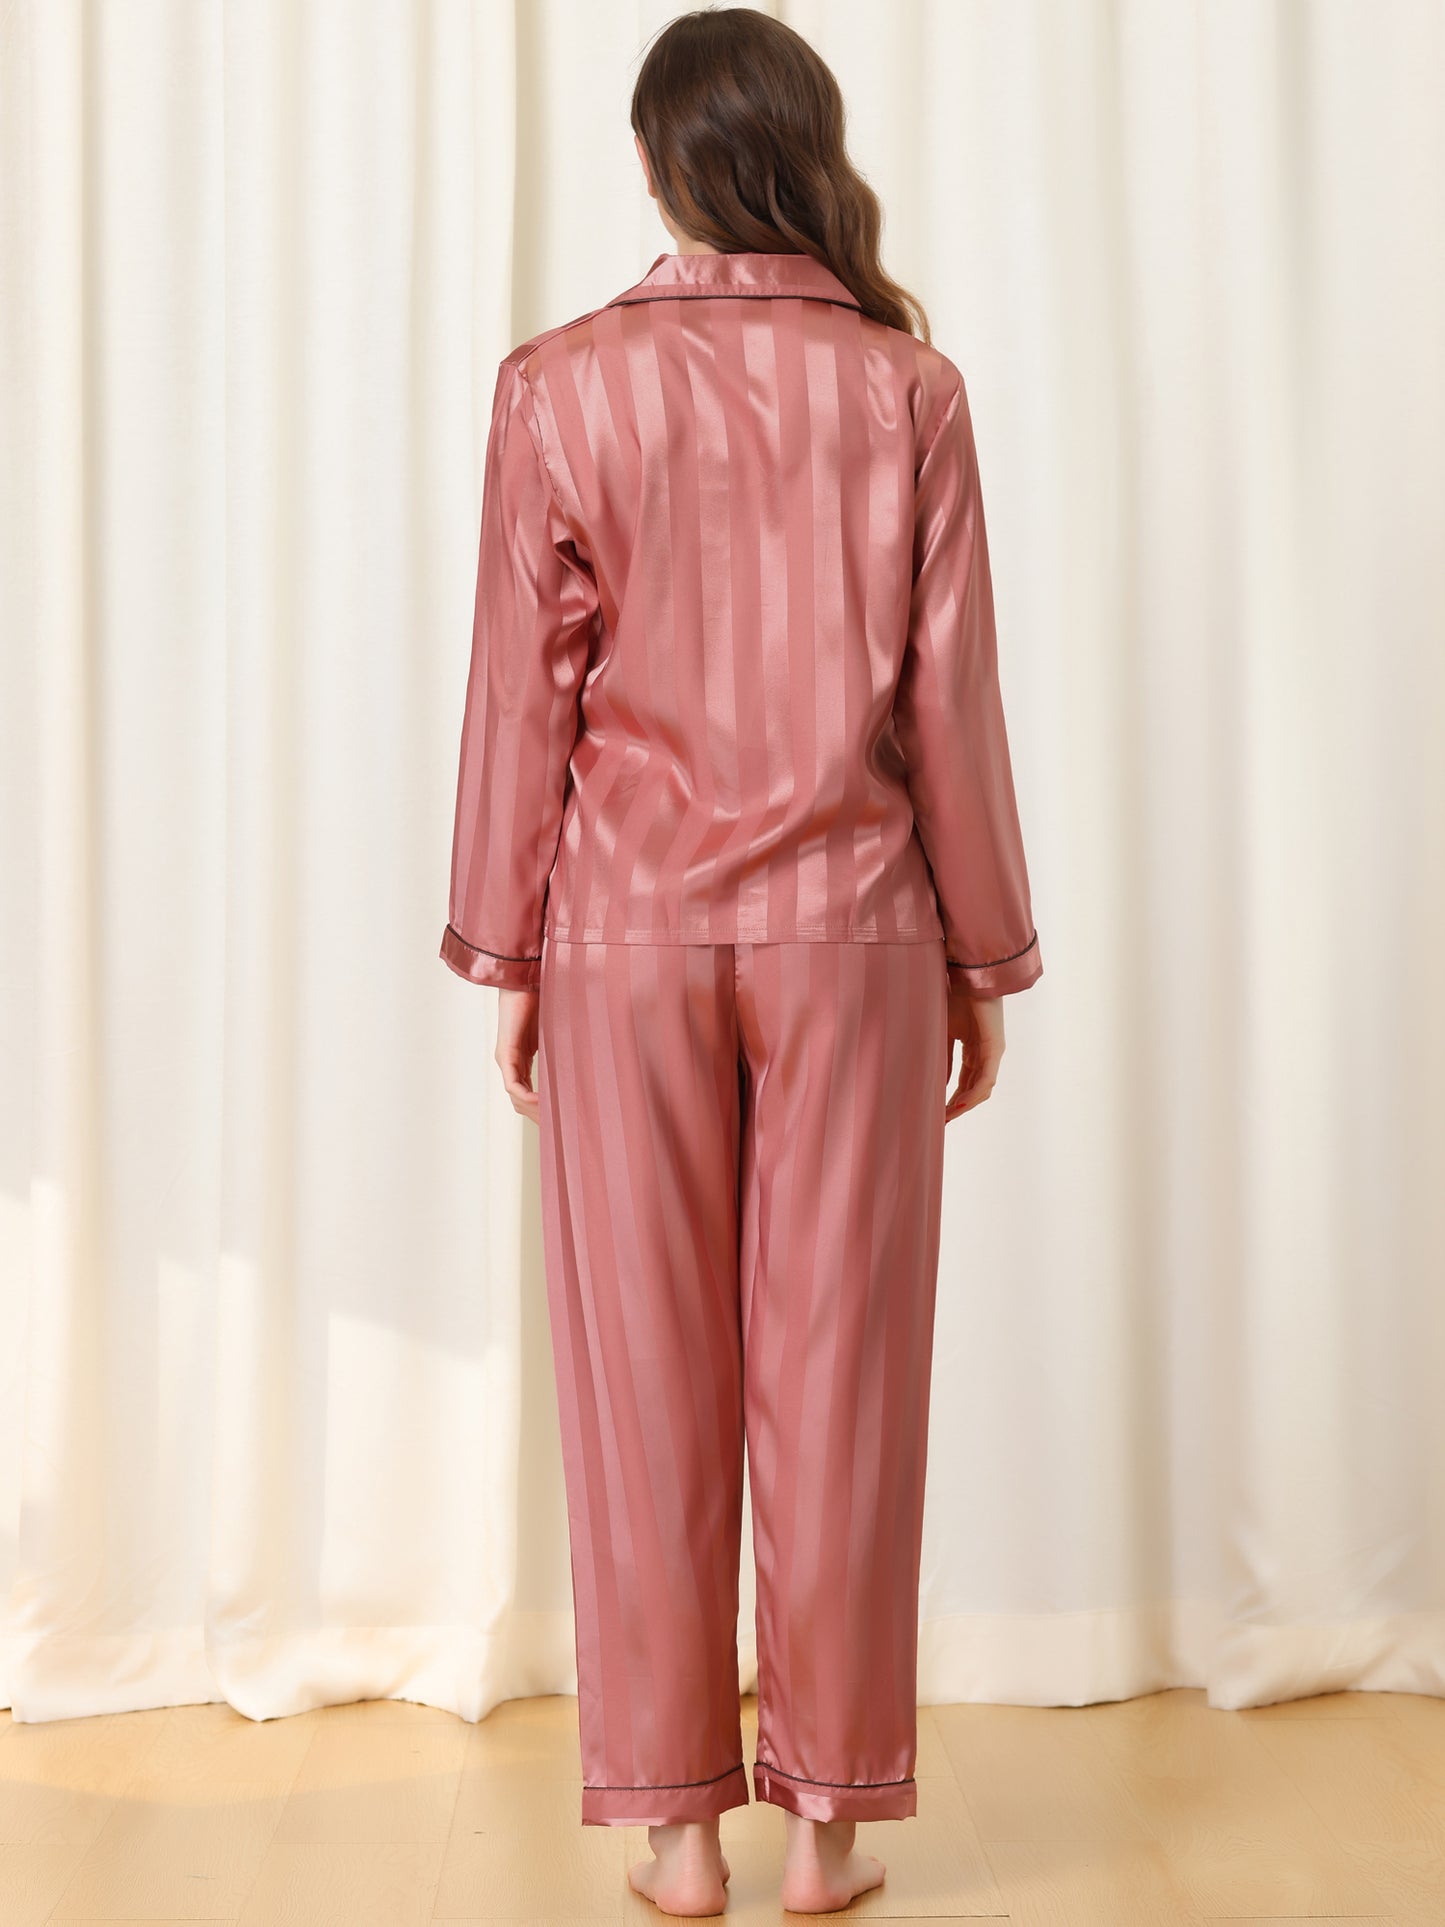 cheibear Satin Sleepwear Button Down Nightwear with Pants Pajama Set Pink